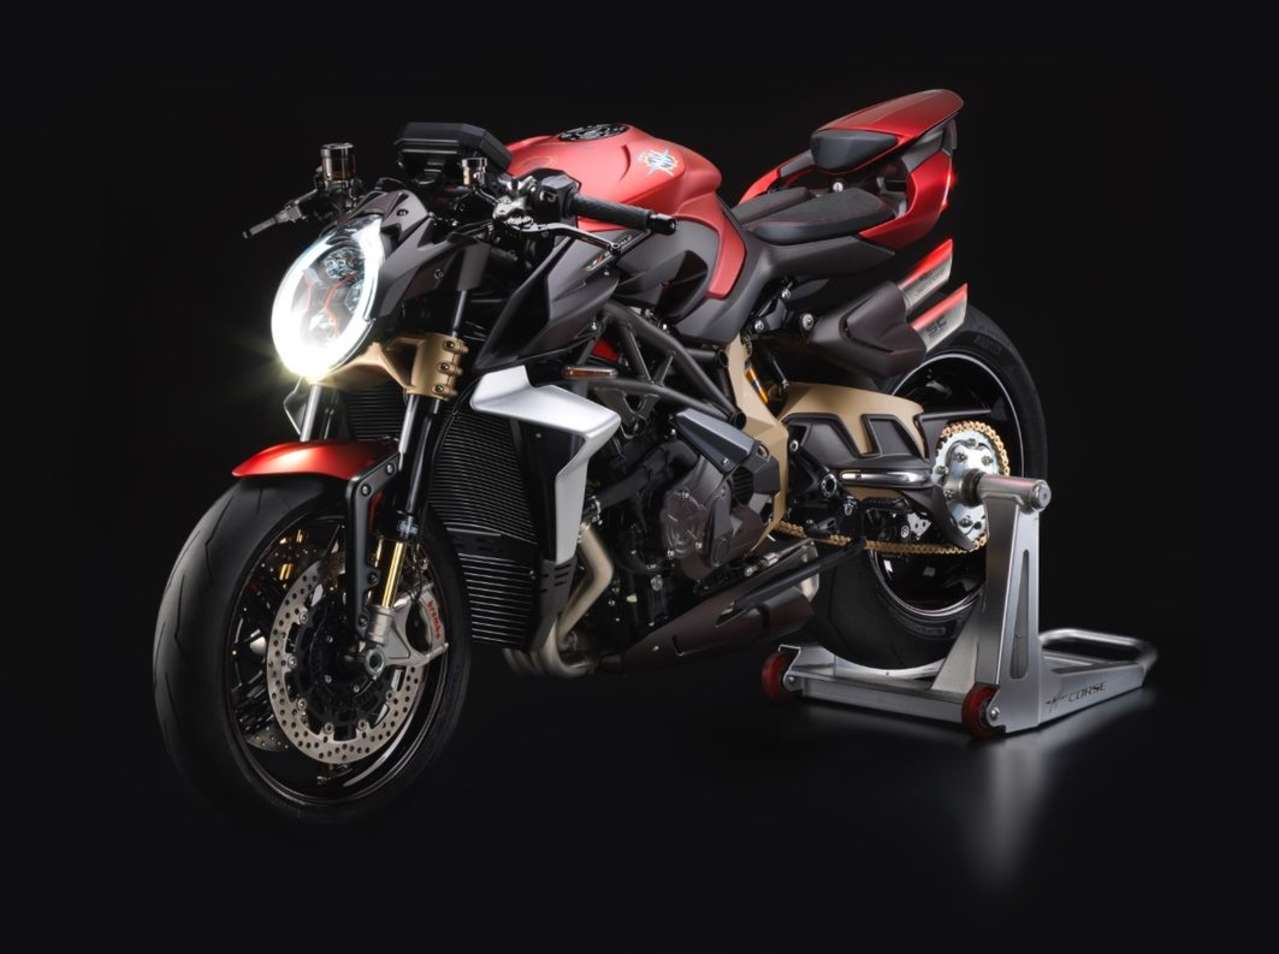 MV AGUSTA Brutale 1000 Serie Oro Das stärkste Naked bike der Welt!